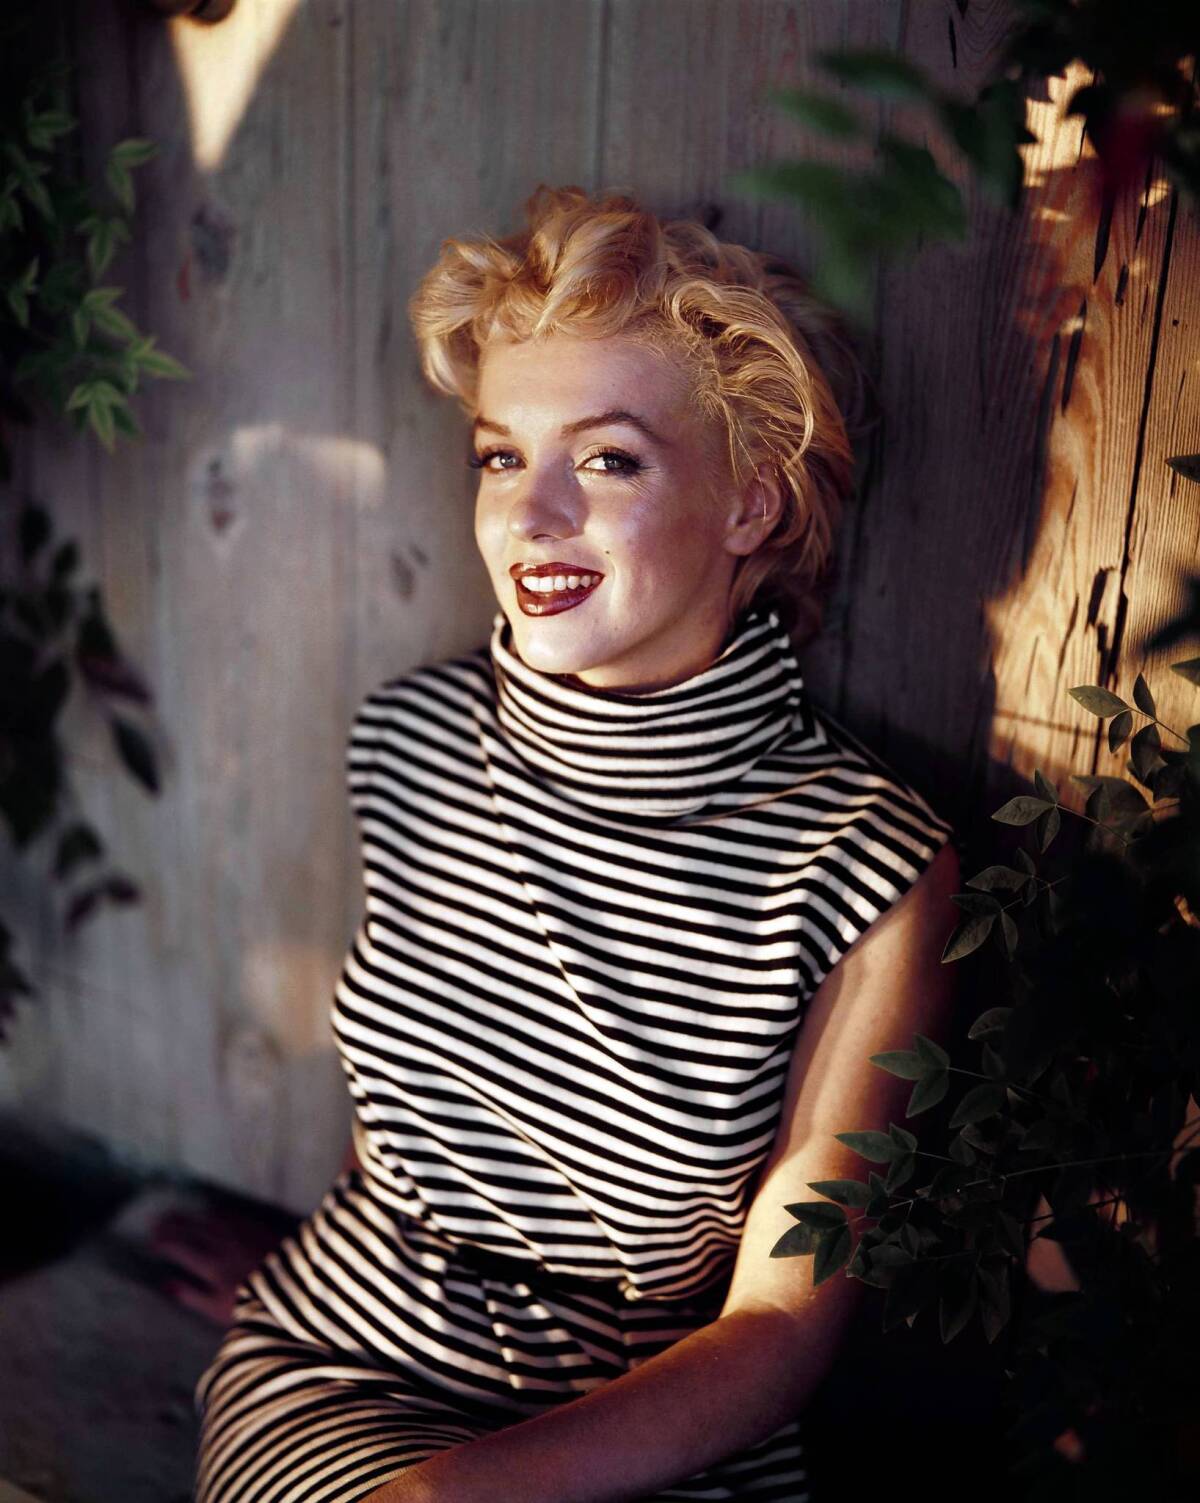 Marilyn Monroe's life on display